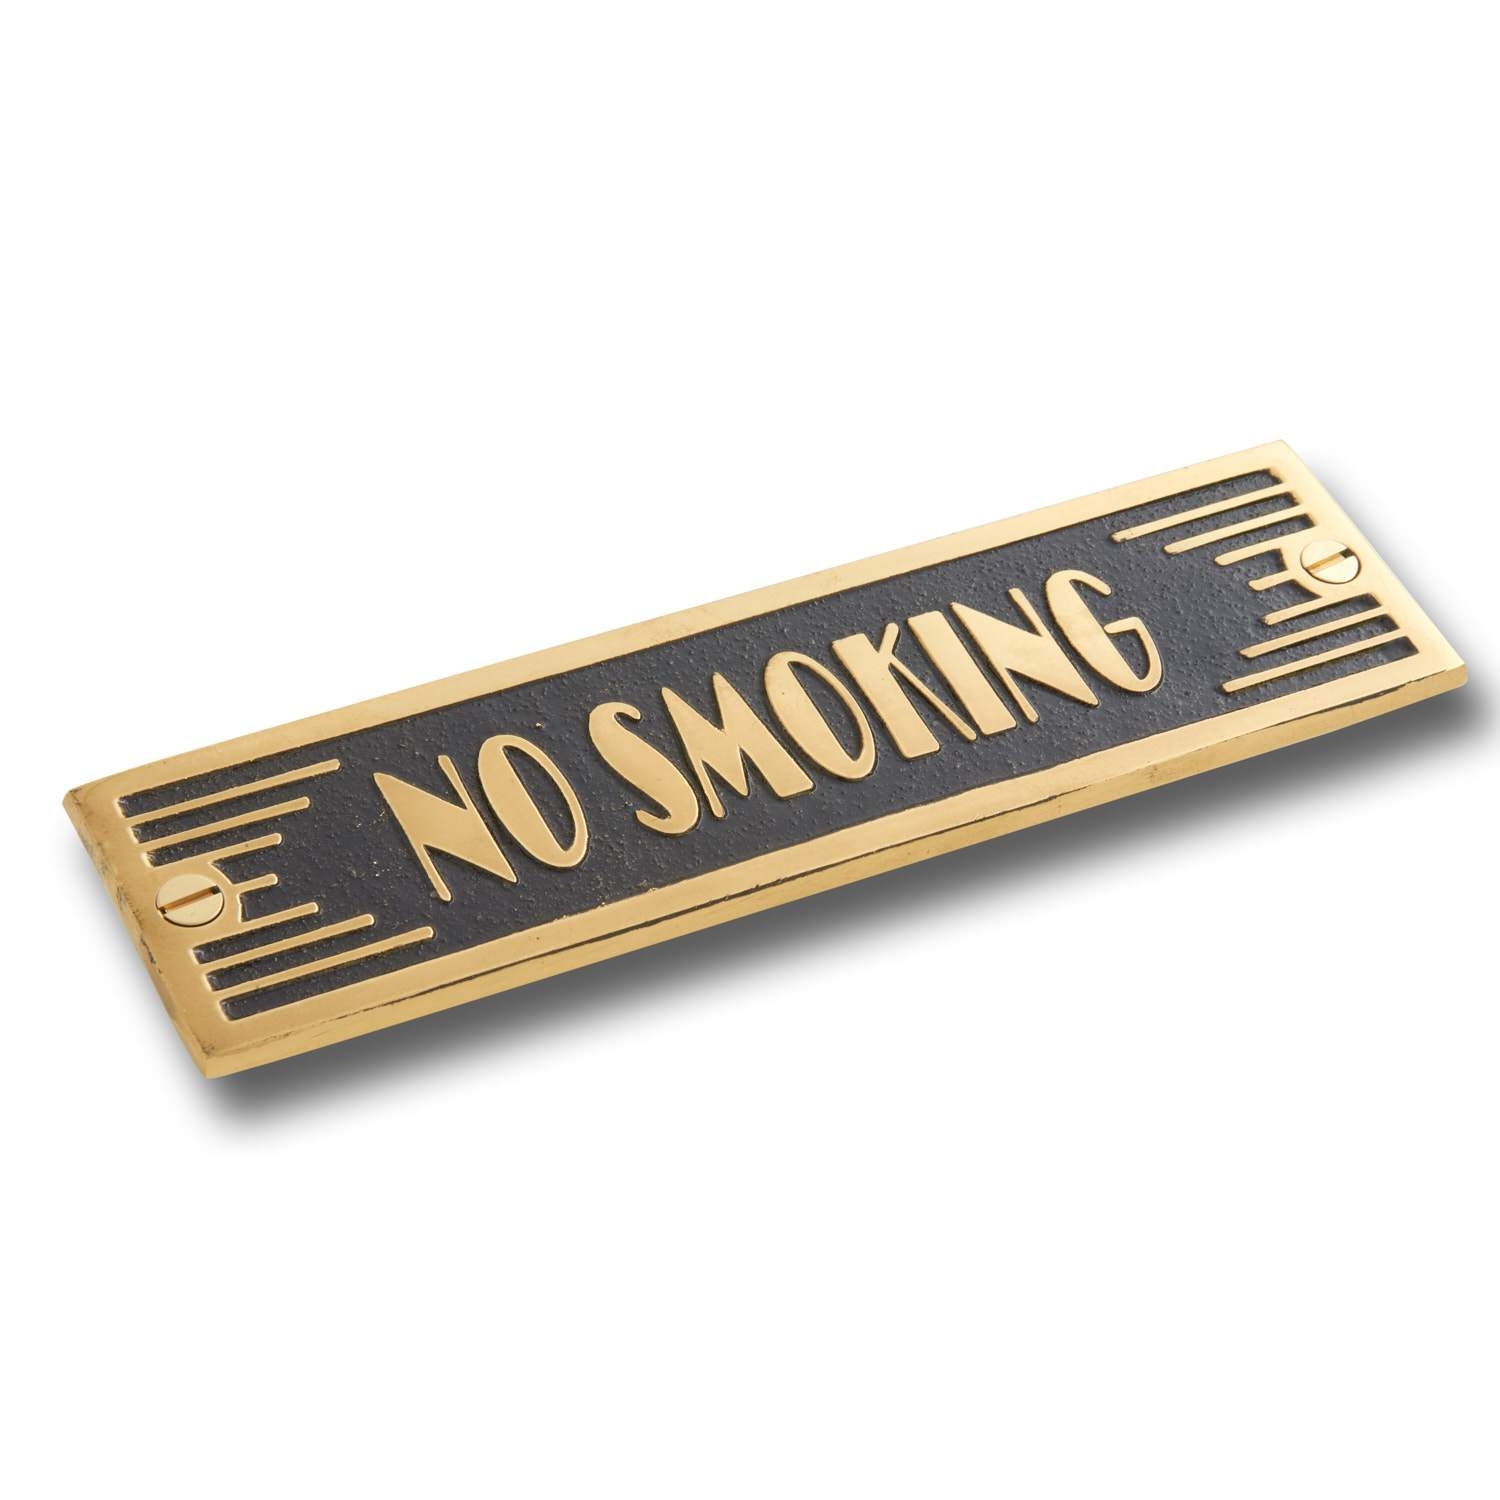 No Smoking Metal Door Sign.  Art Deco Style Home Décor Wall Plaque Accessories – No Smoking + Arrow Brass